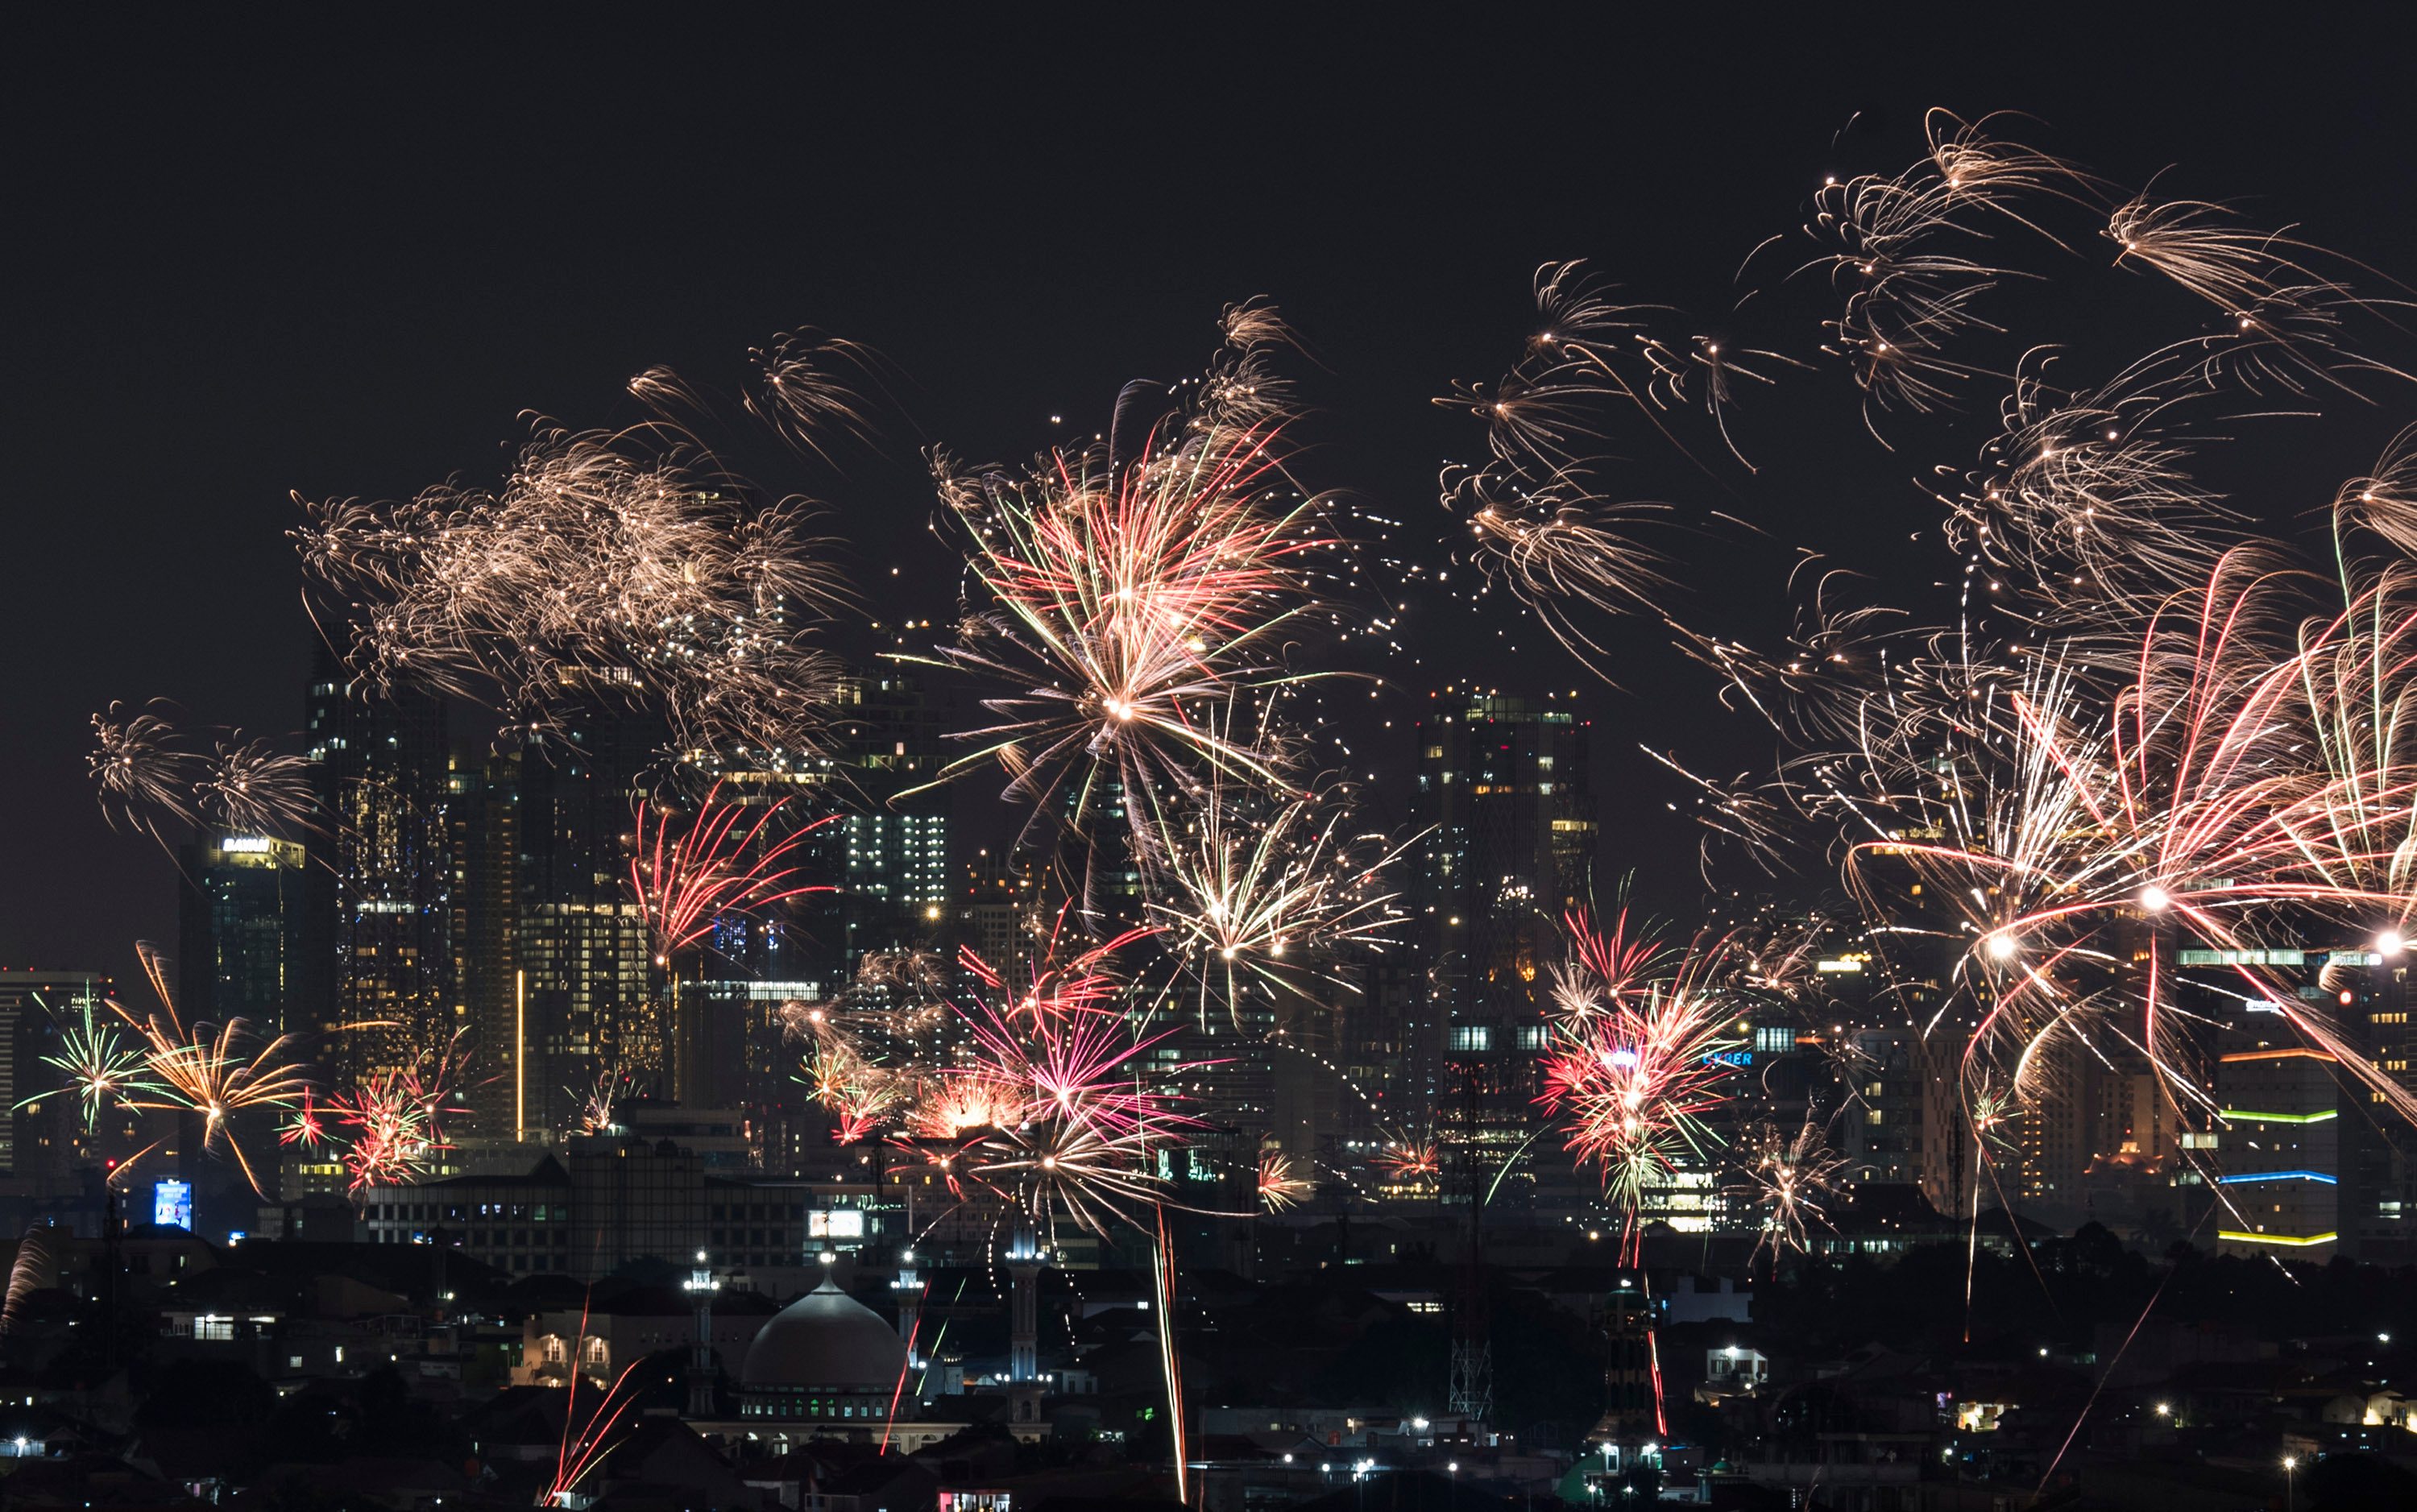 Suasana pesta kembang api menghiasi langit di Jakarta, pada 1 Januari 2017. Foto oleh M Agung Rajasa/Antara 